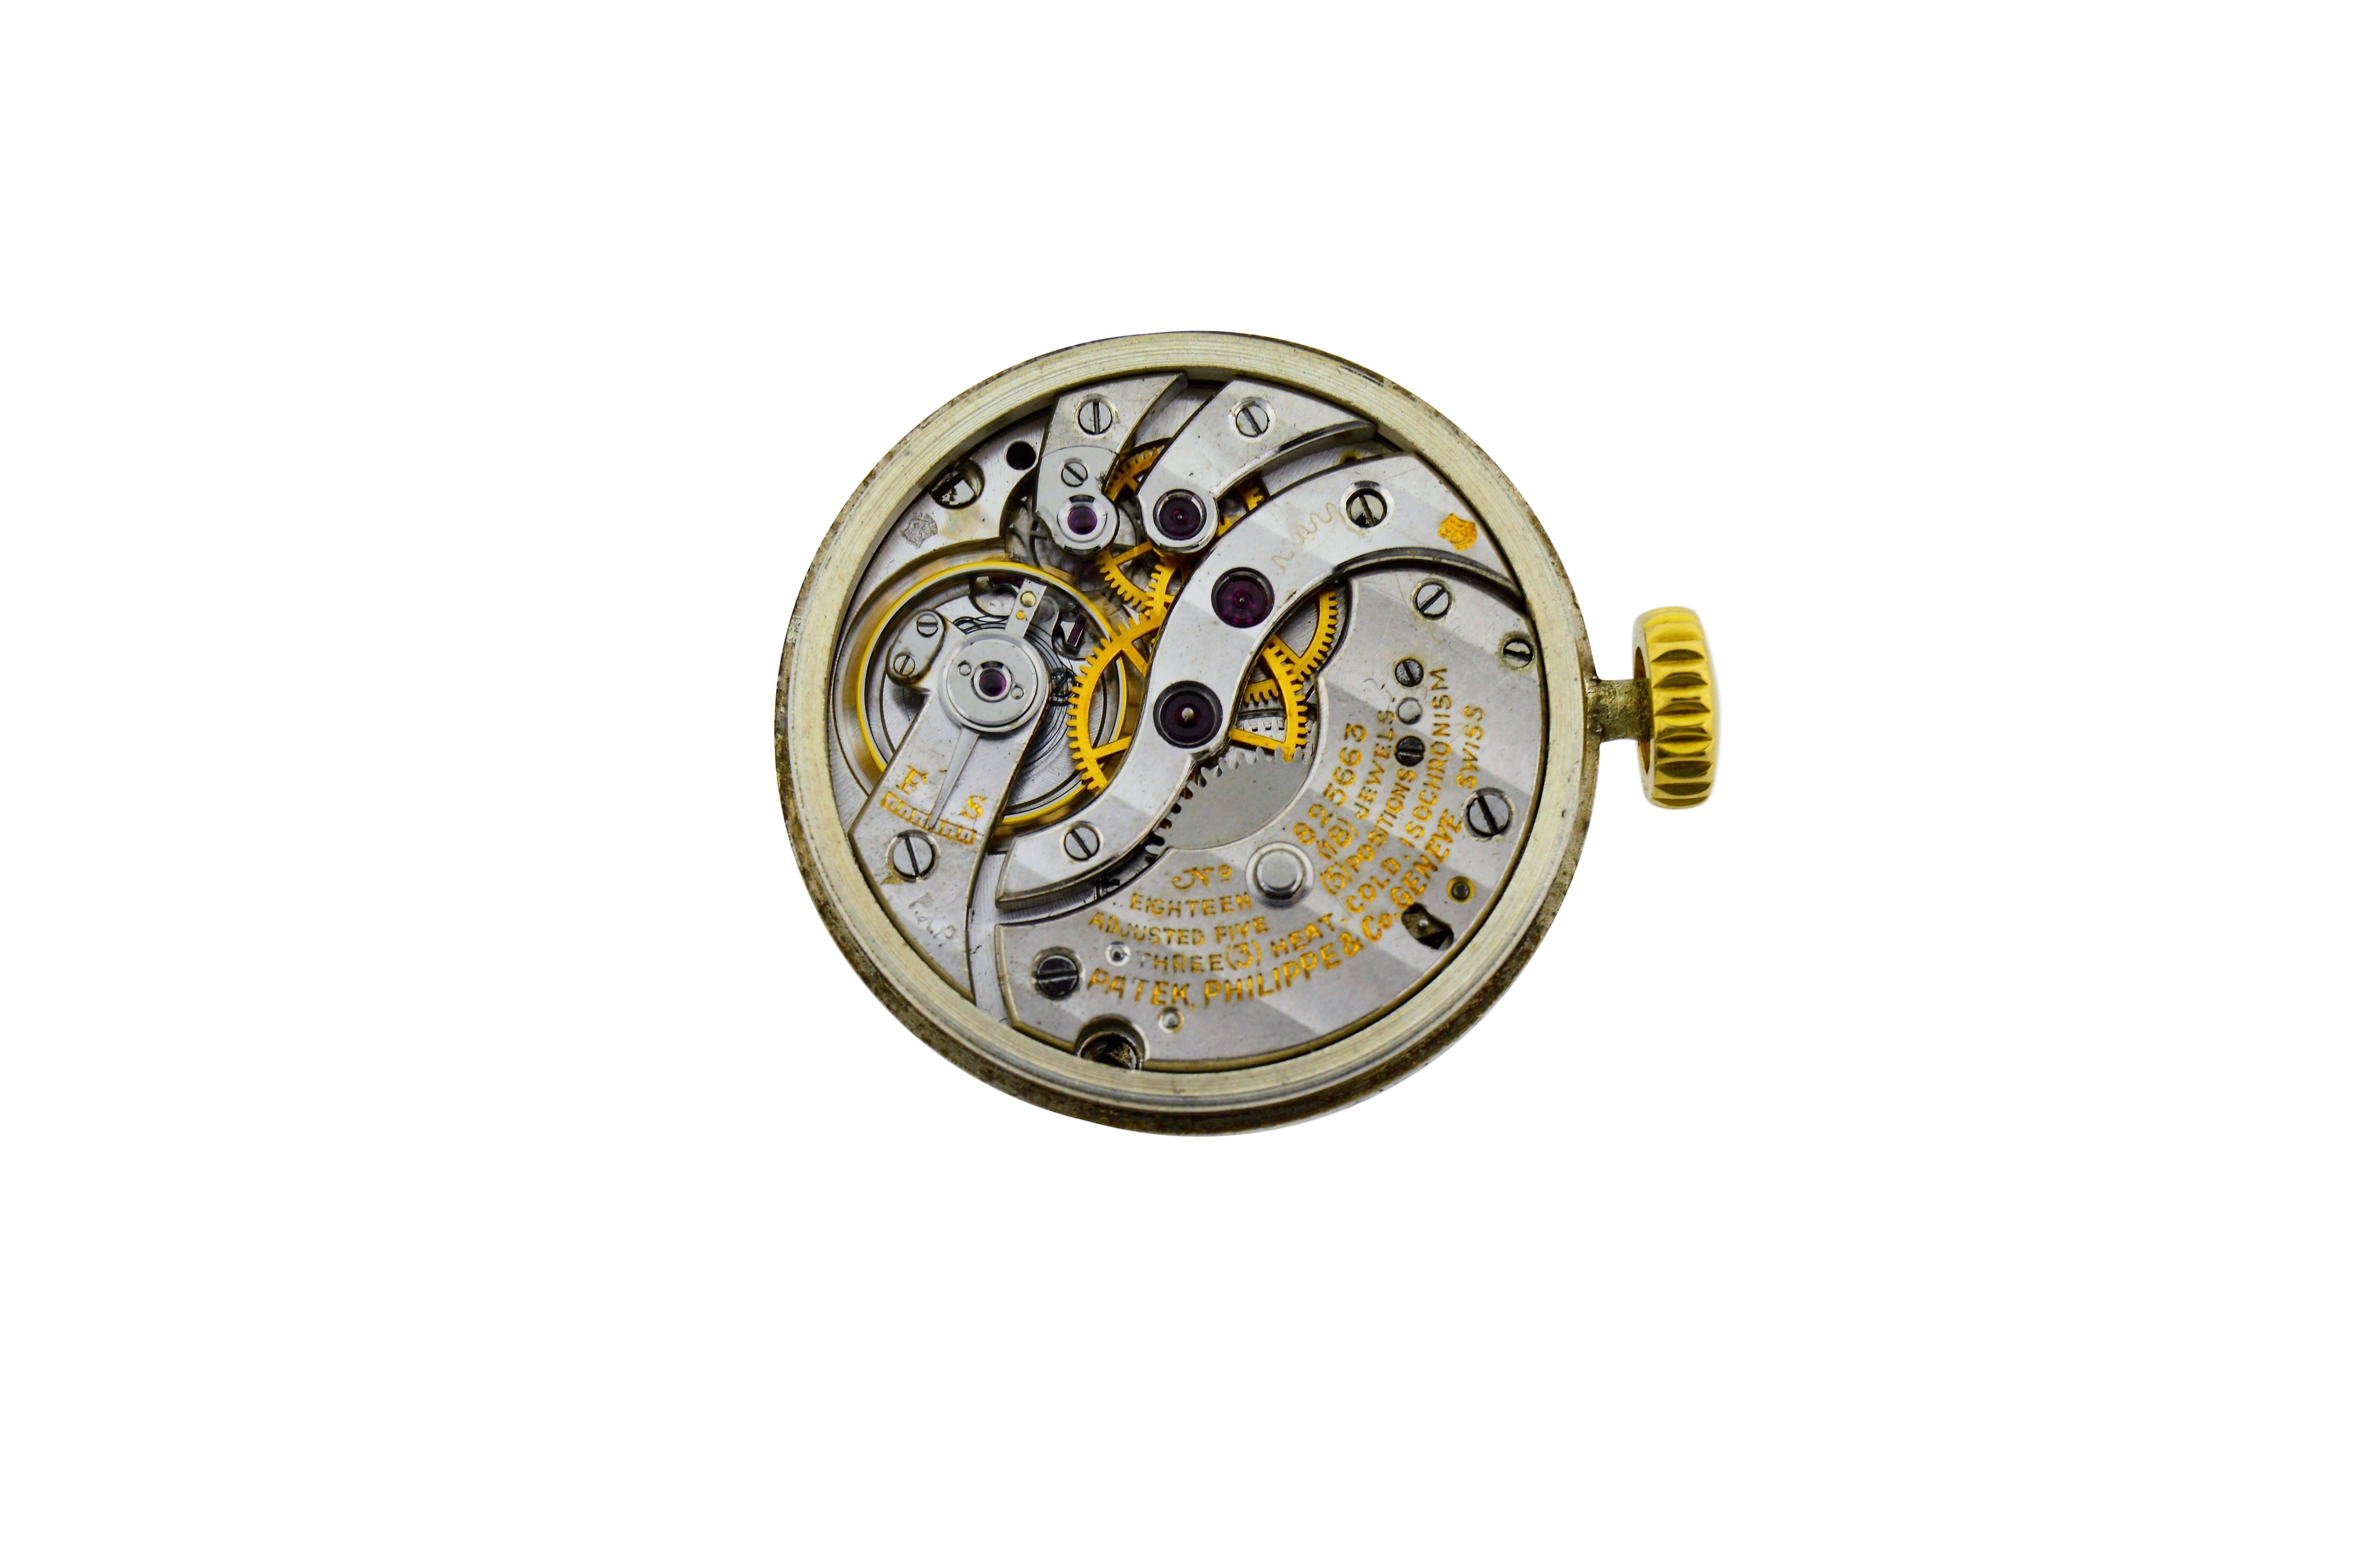 Patek Philippe Yellow Gold Hand Made Art Deco Manual Winding Watch 3